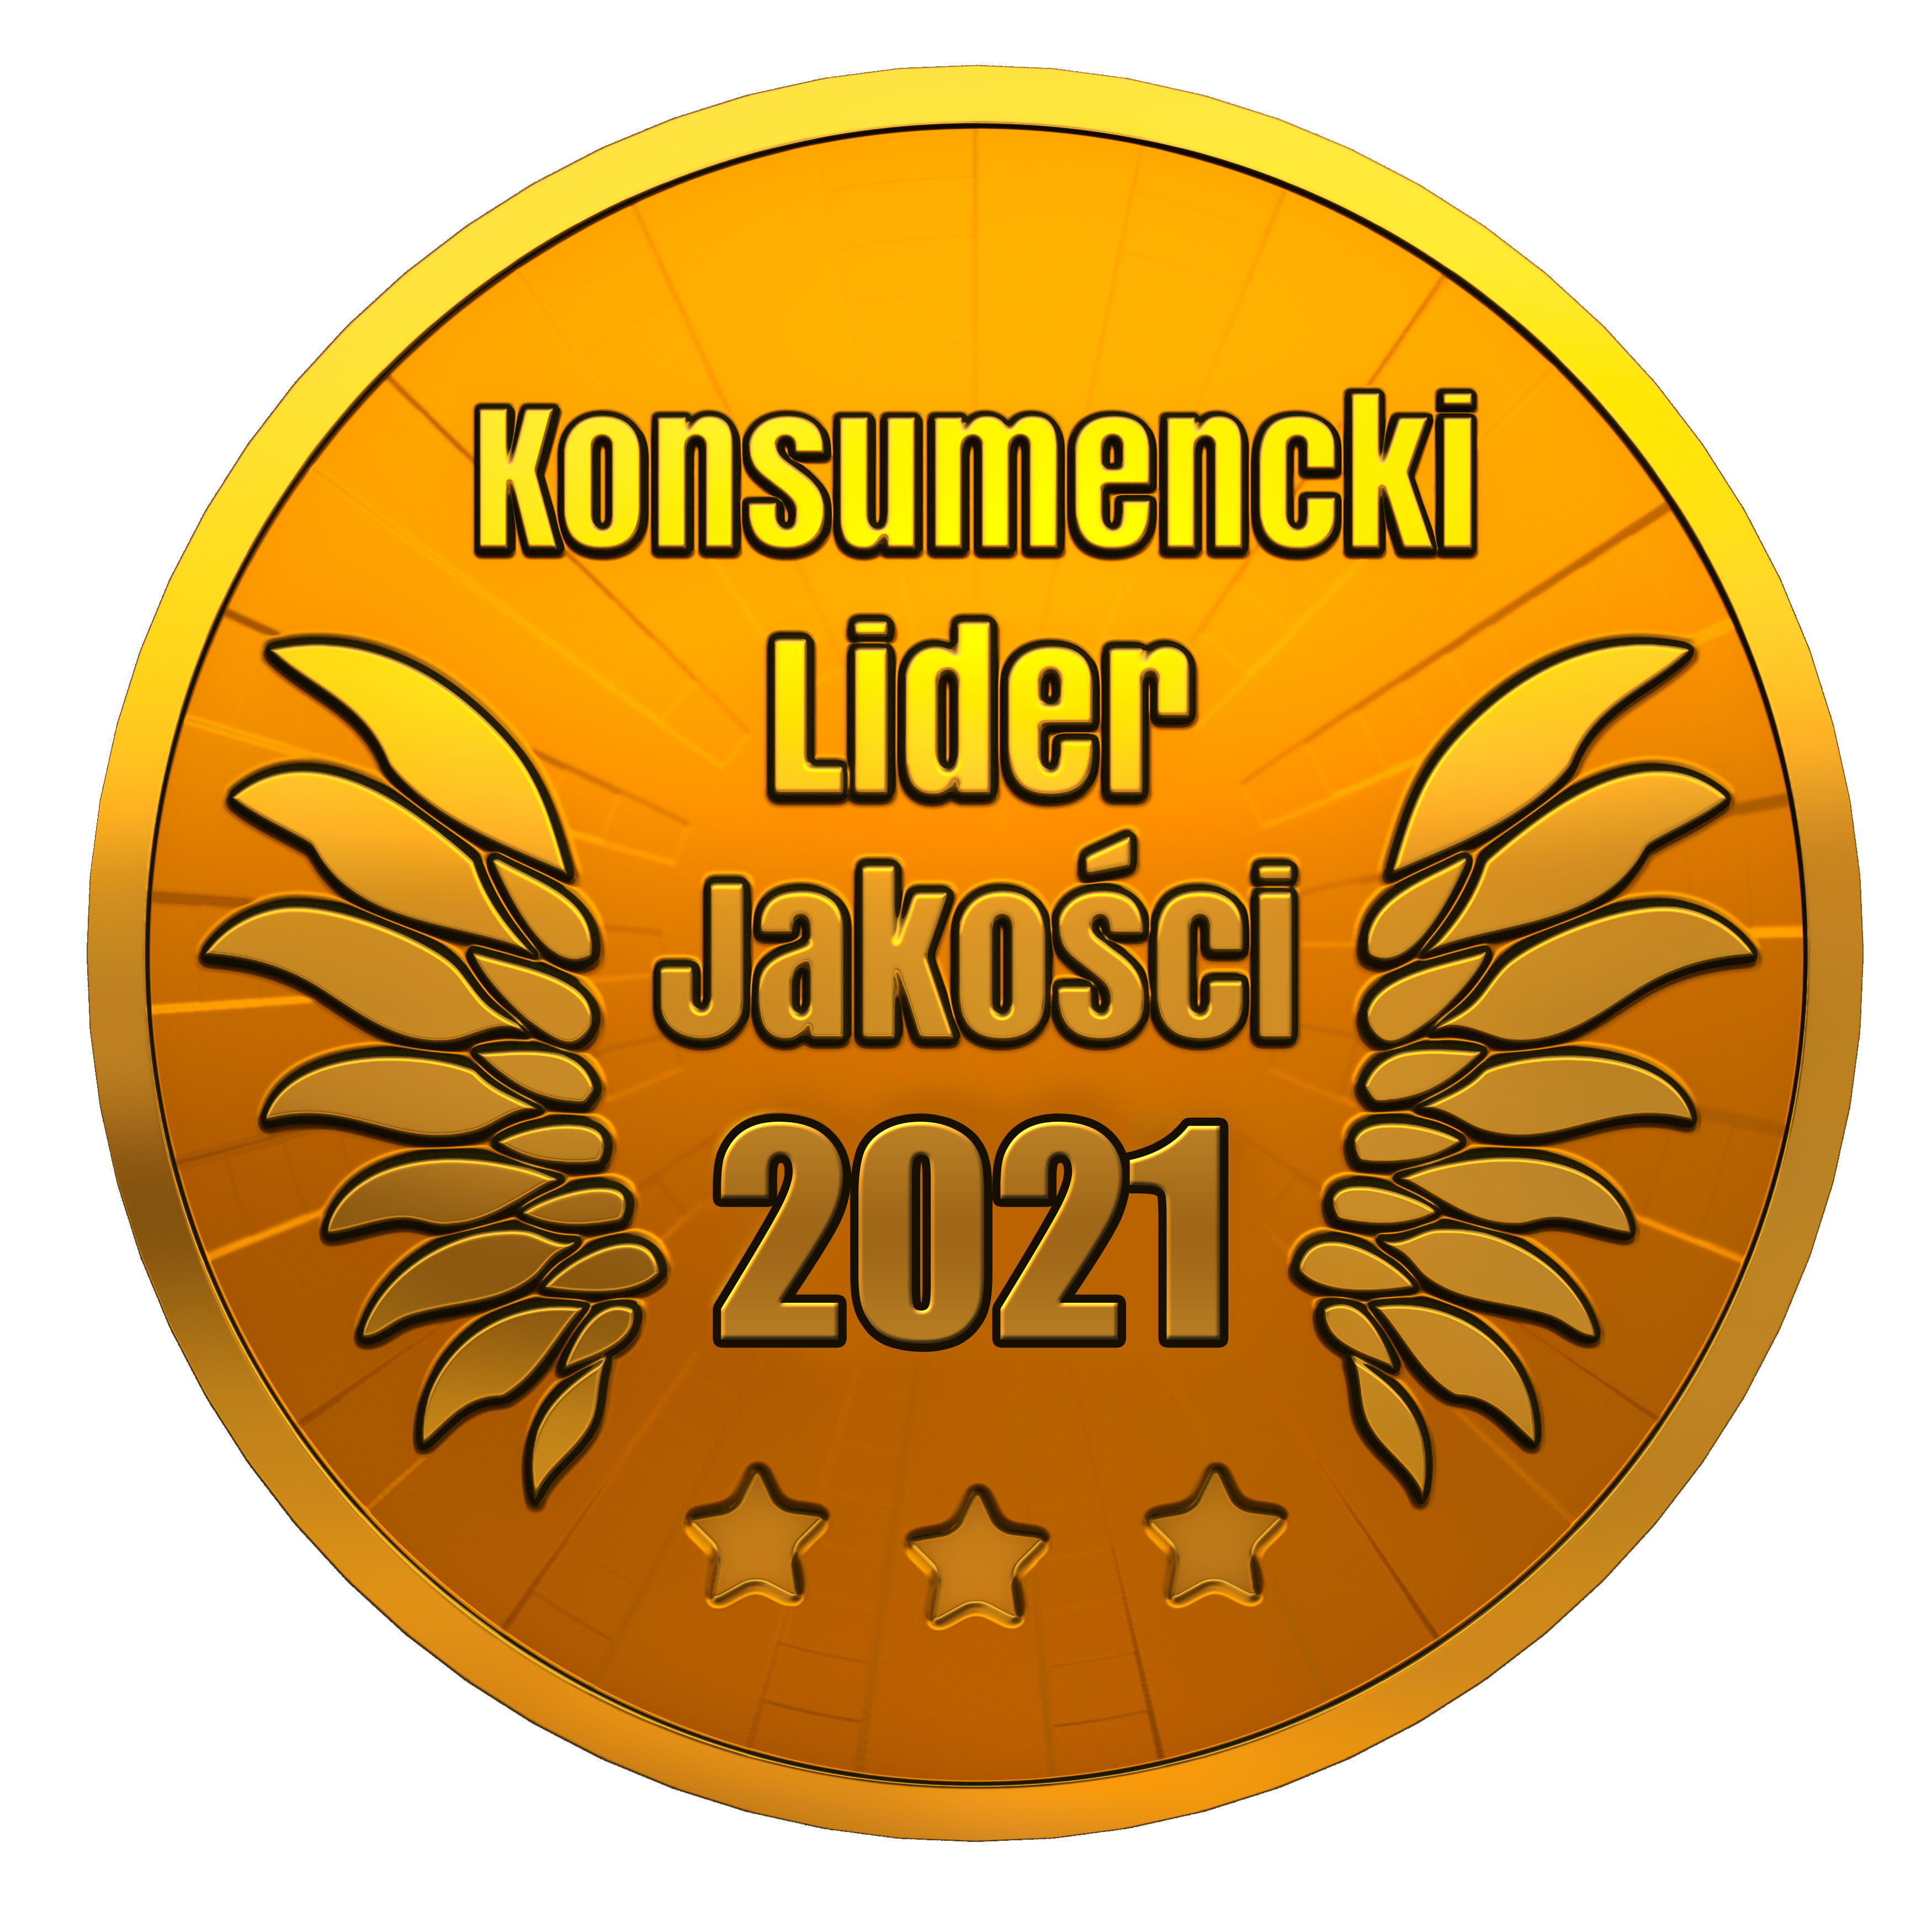 Konsumencki lider jakości 2021